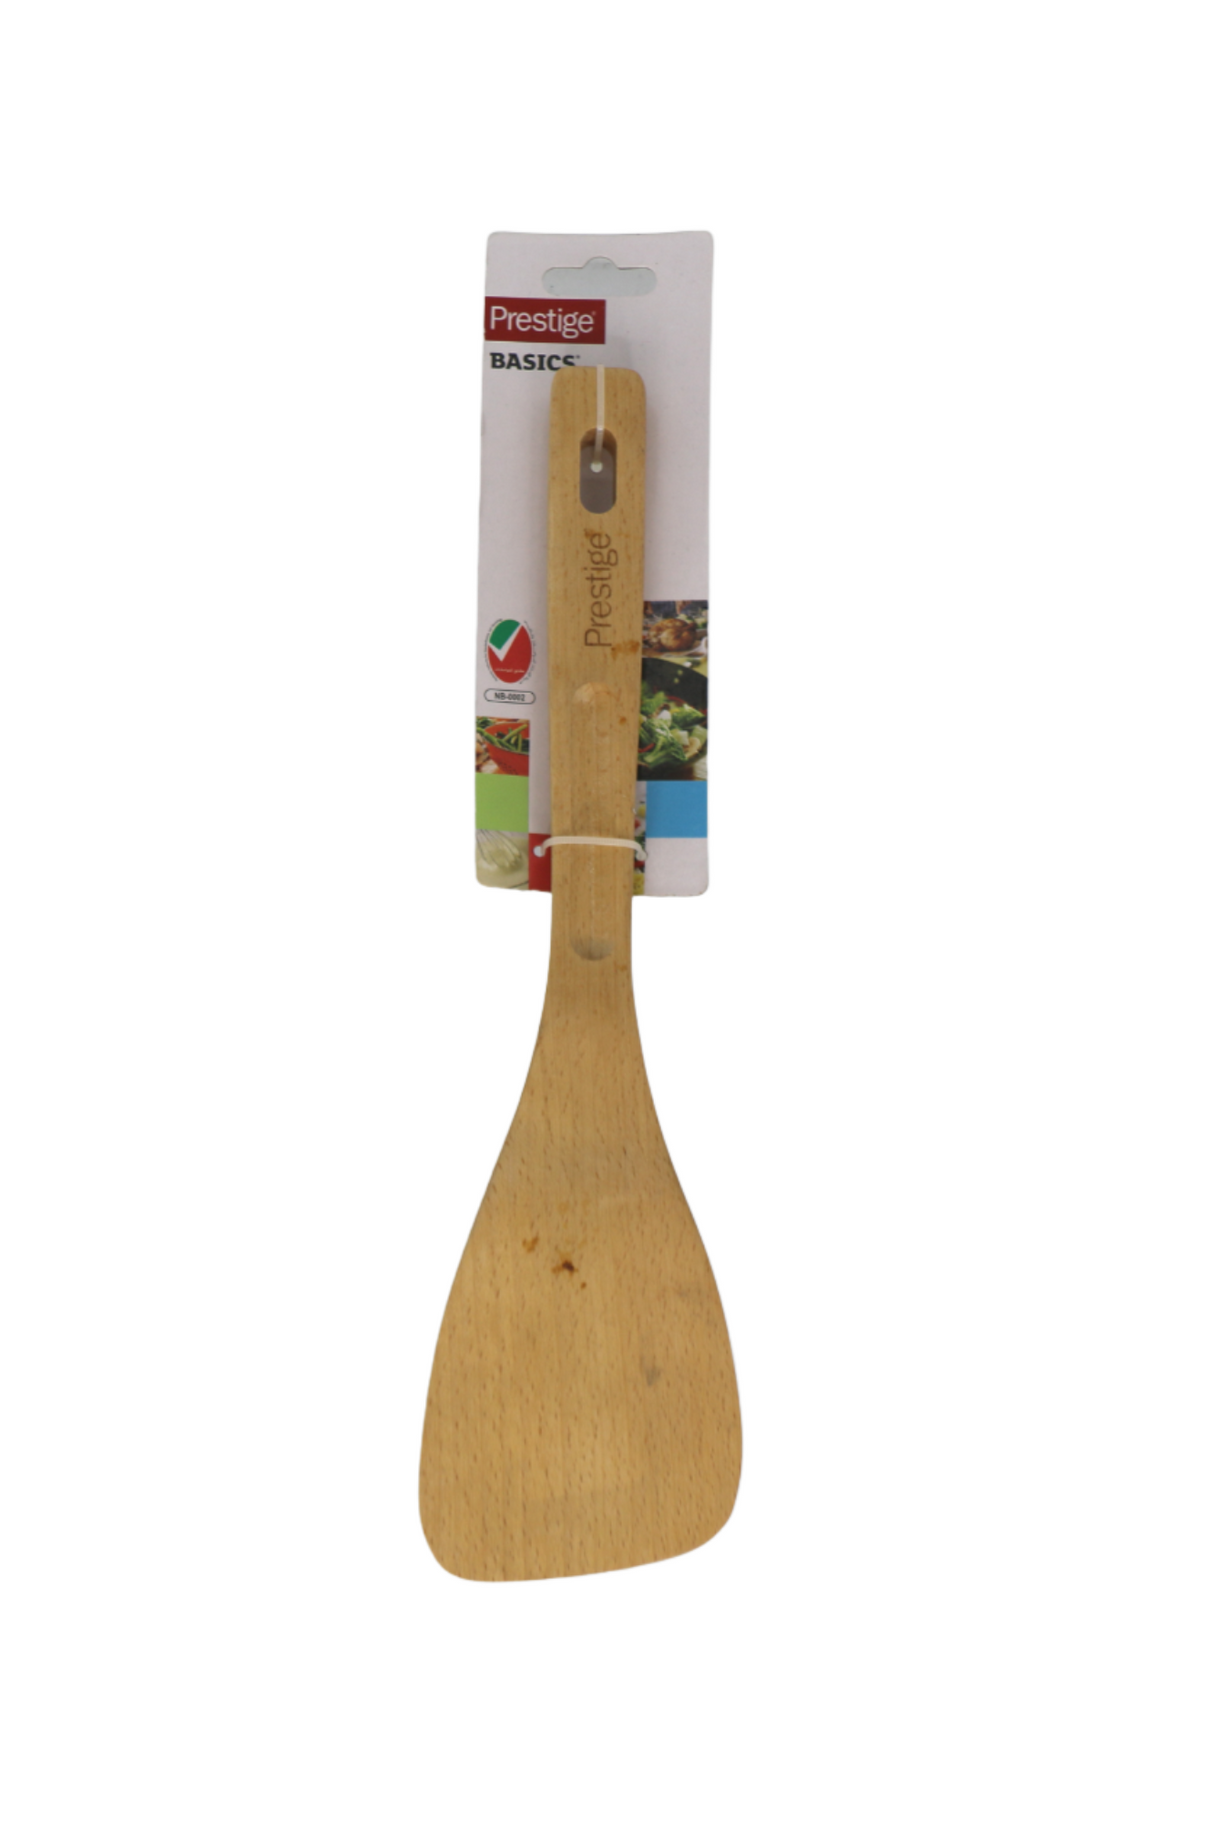 prstg wood spatula 51175